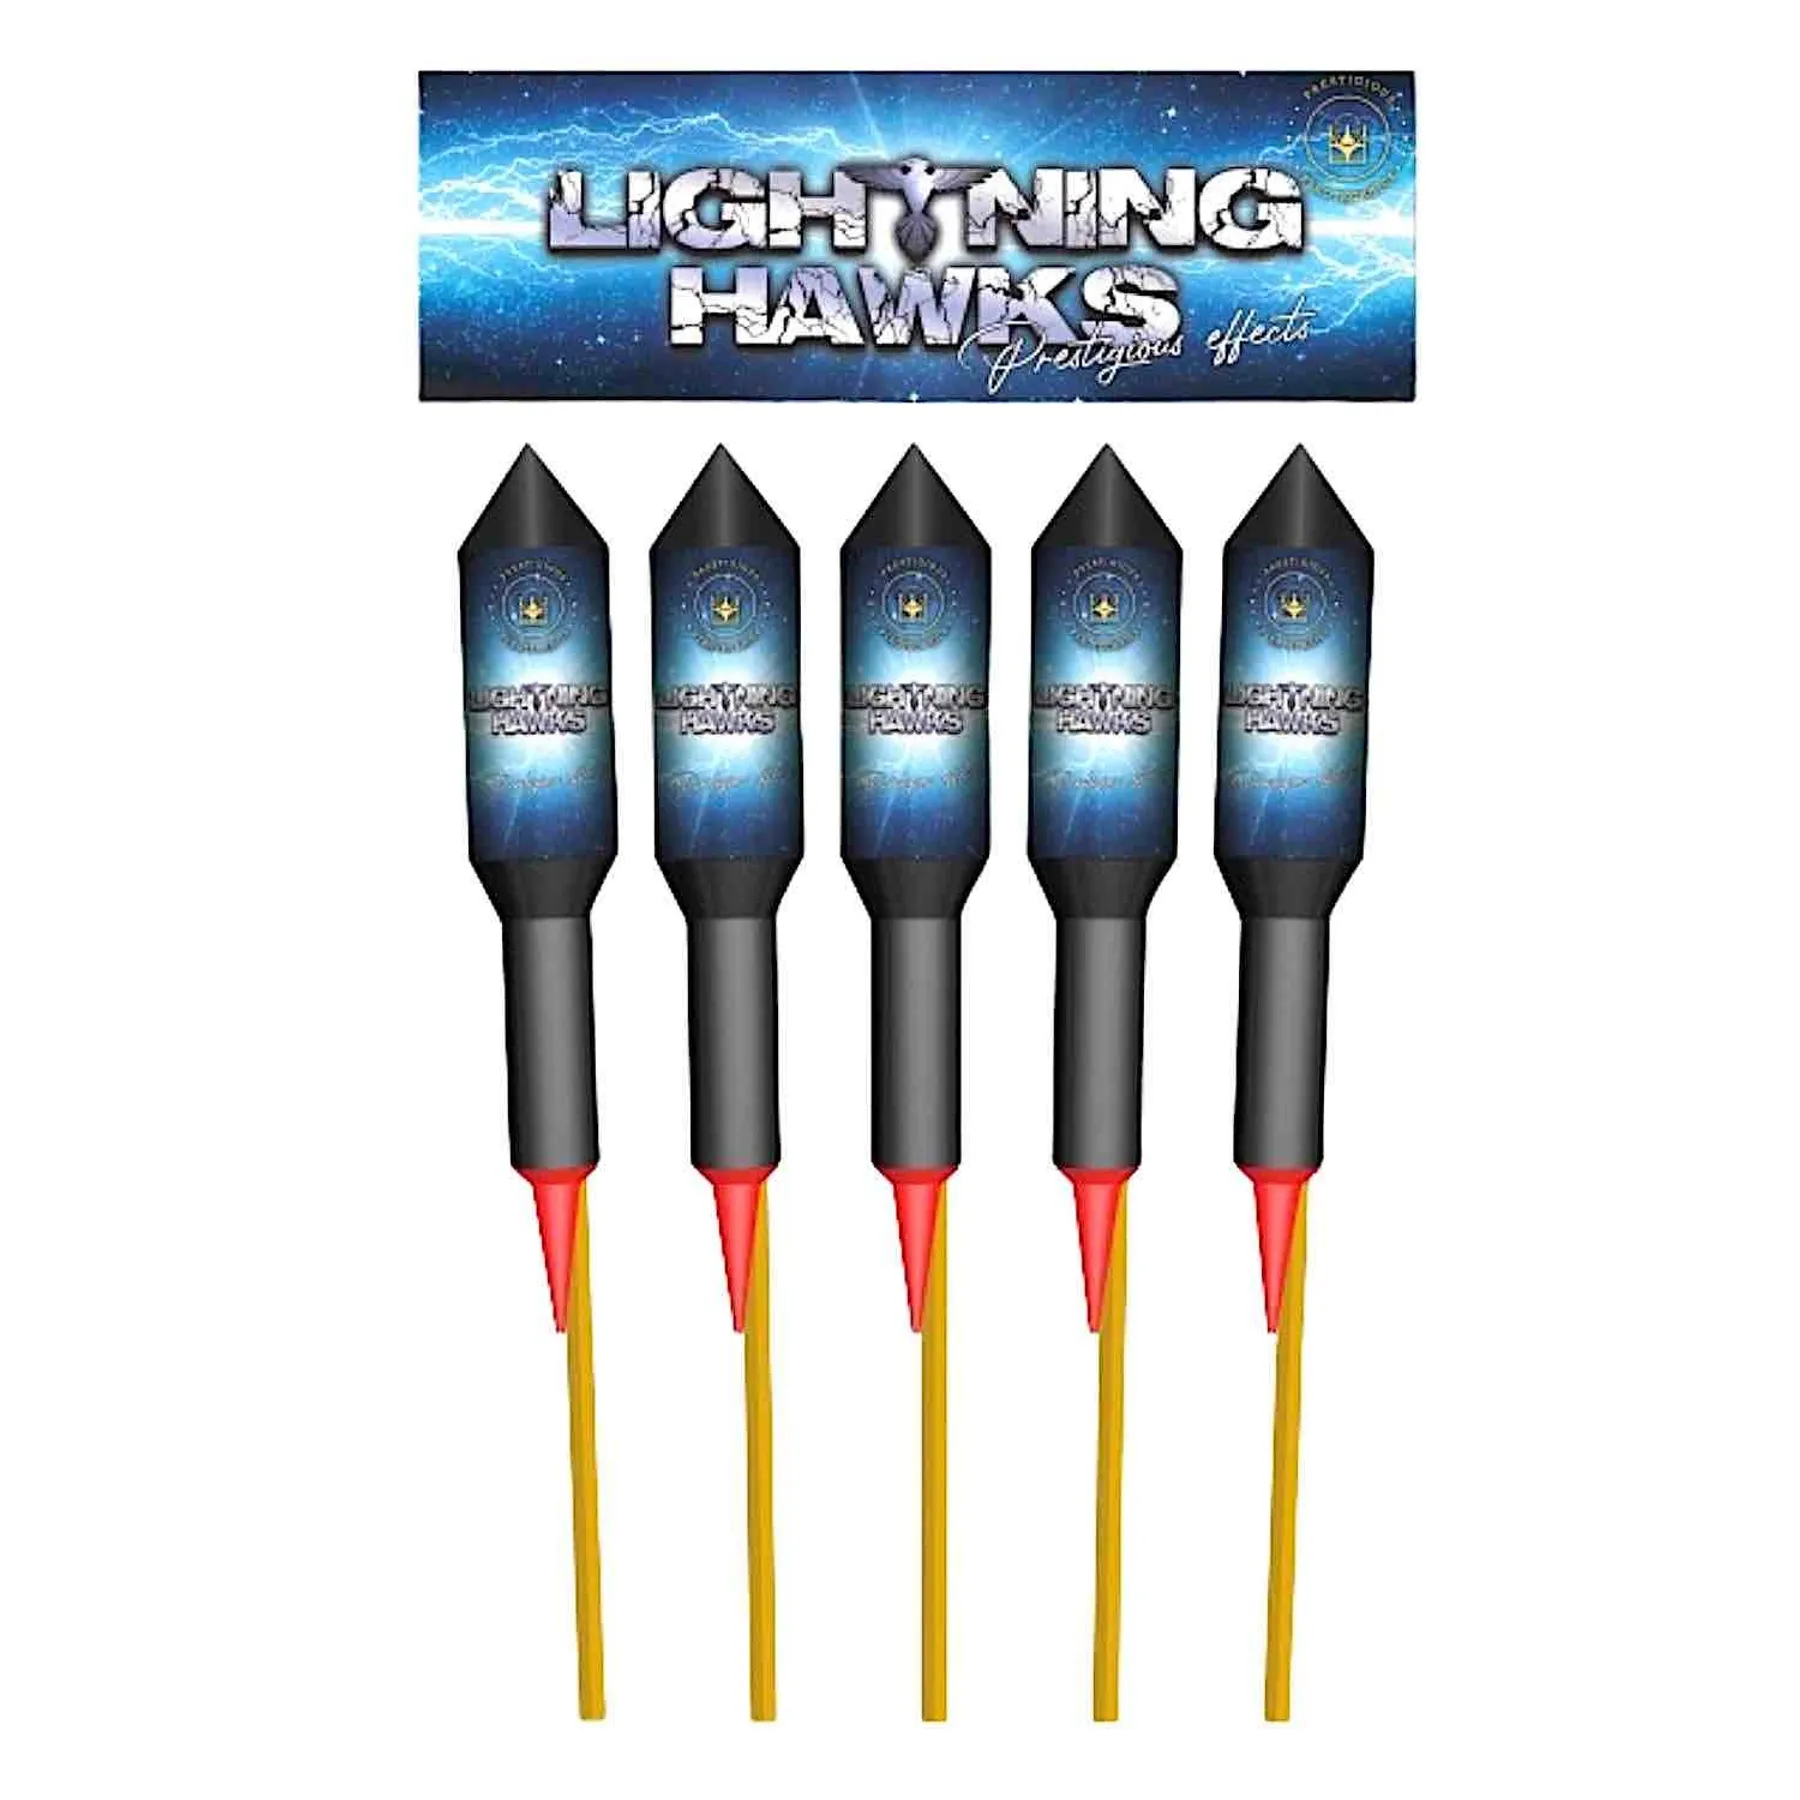 Lightning Hawks Rockets Prestigious Fireworks